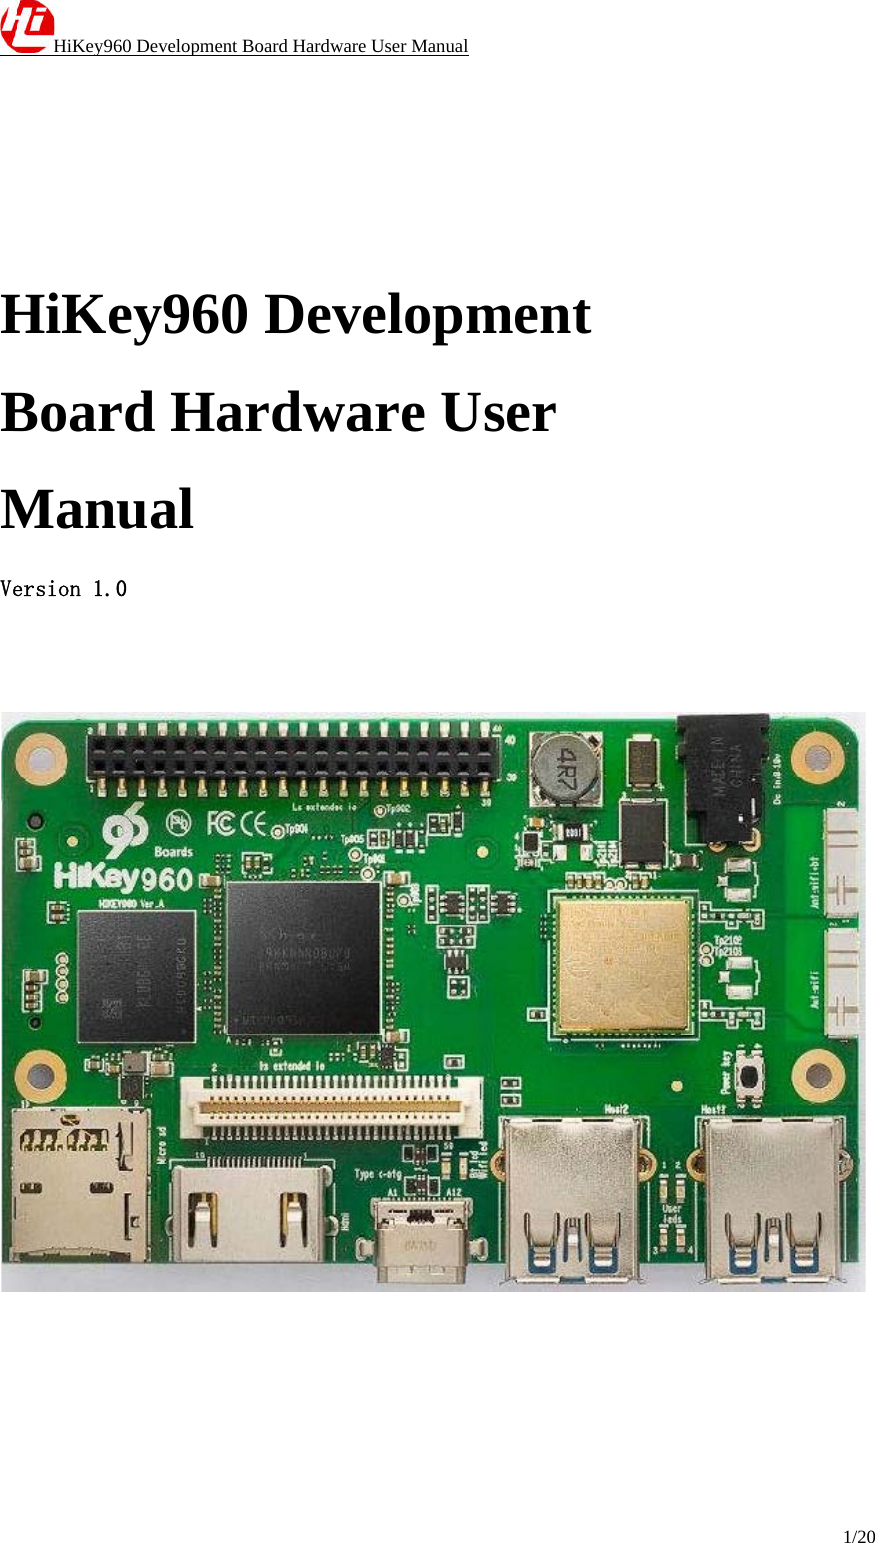 HiKey960 Development Board Hardware User Manual 1/20    HiKey960 Development Board Hardware User Manual Version 1.0       